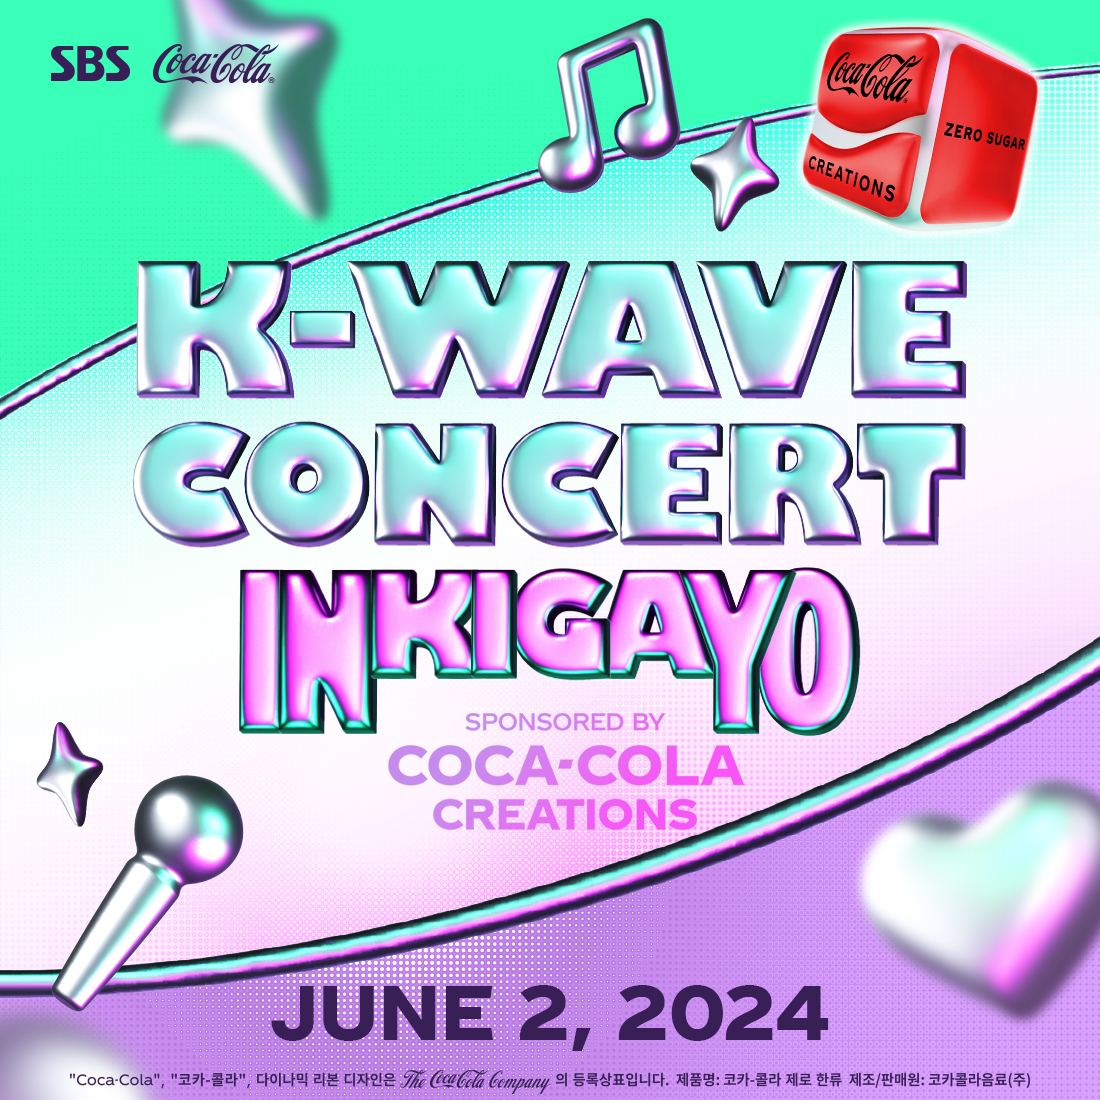 KWave Concert